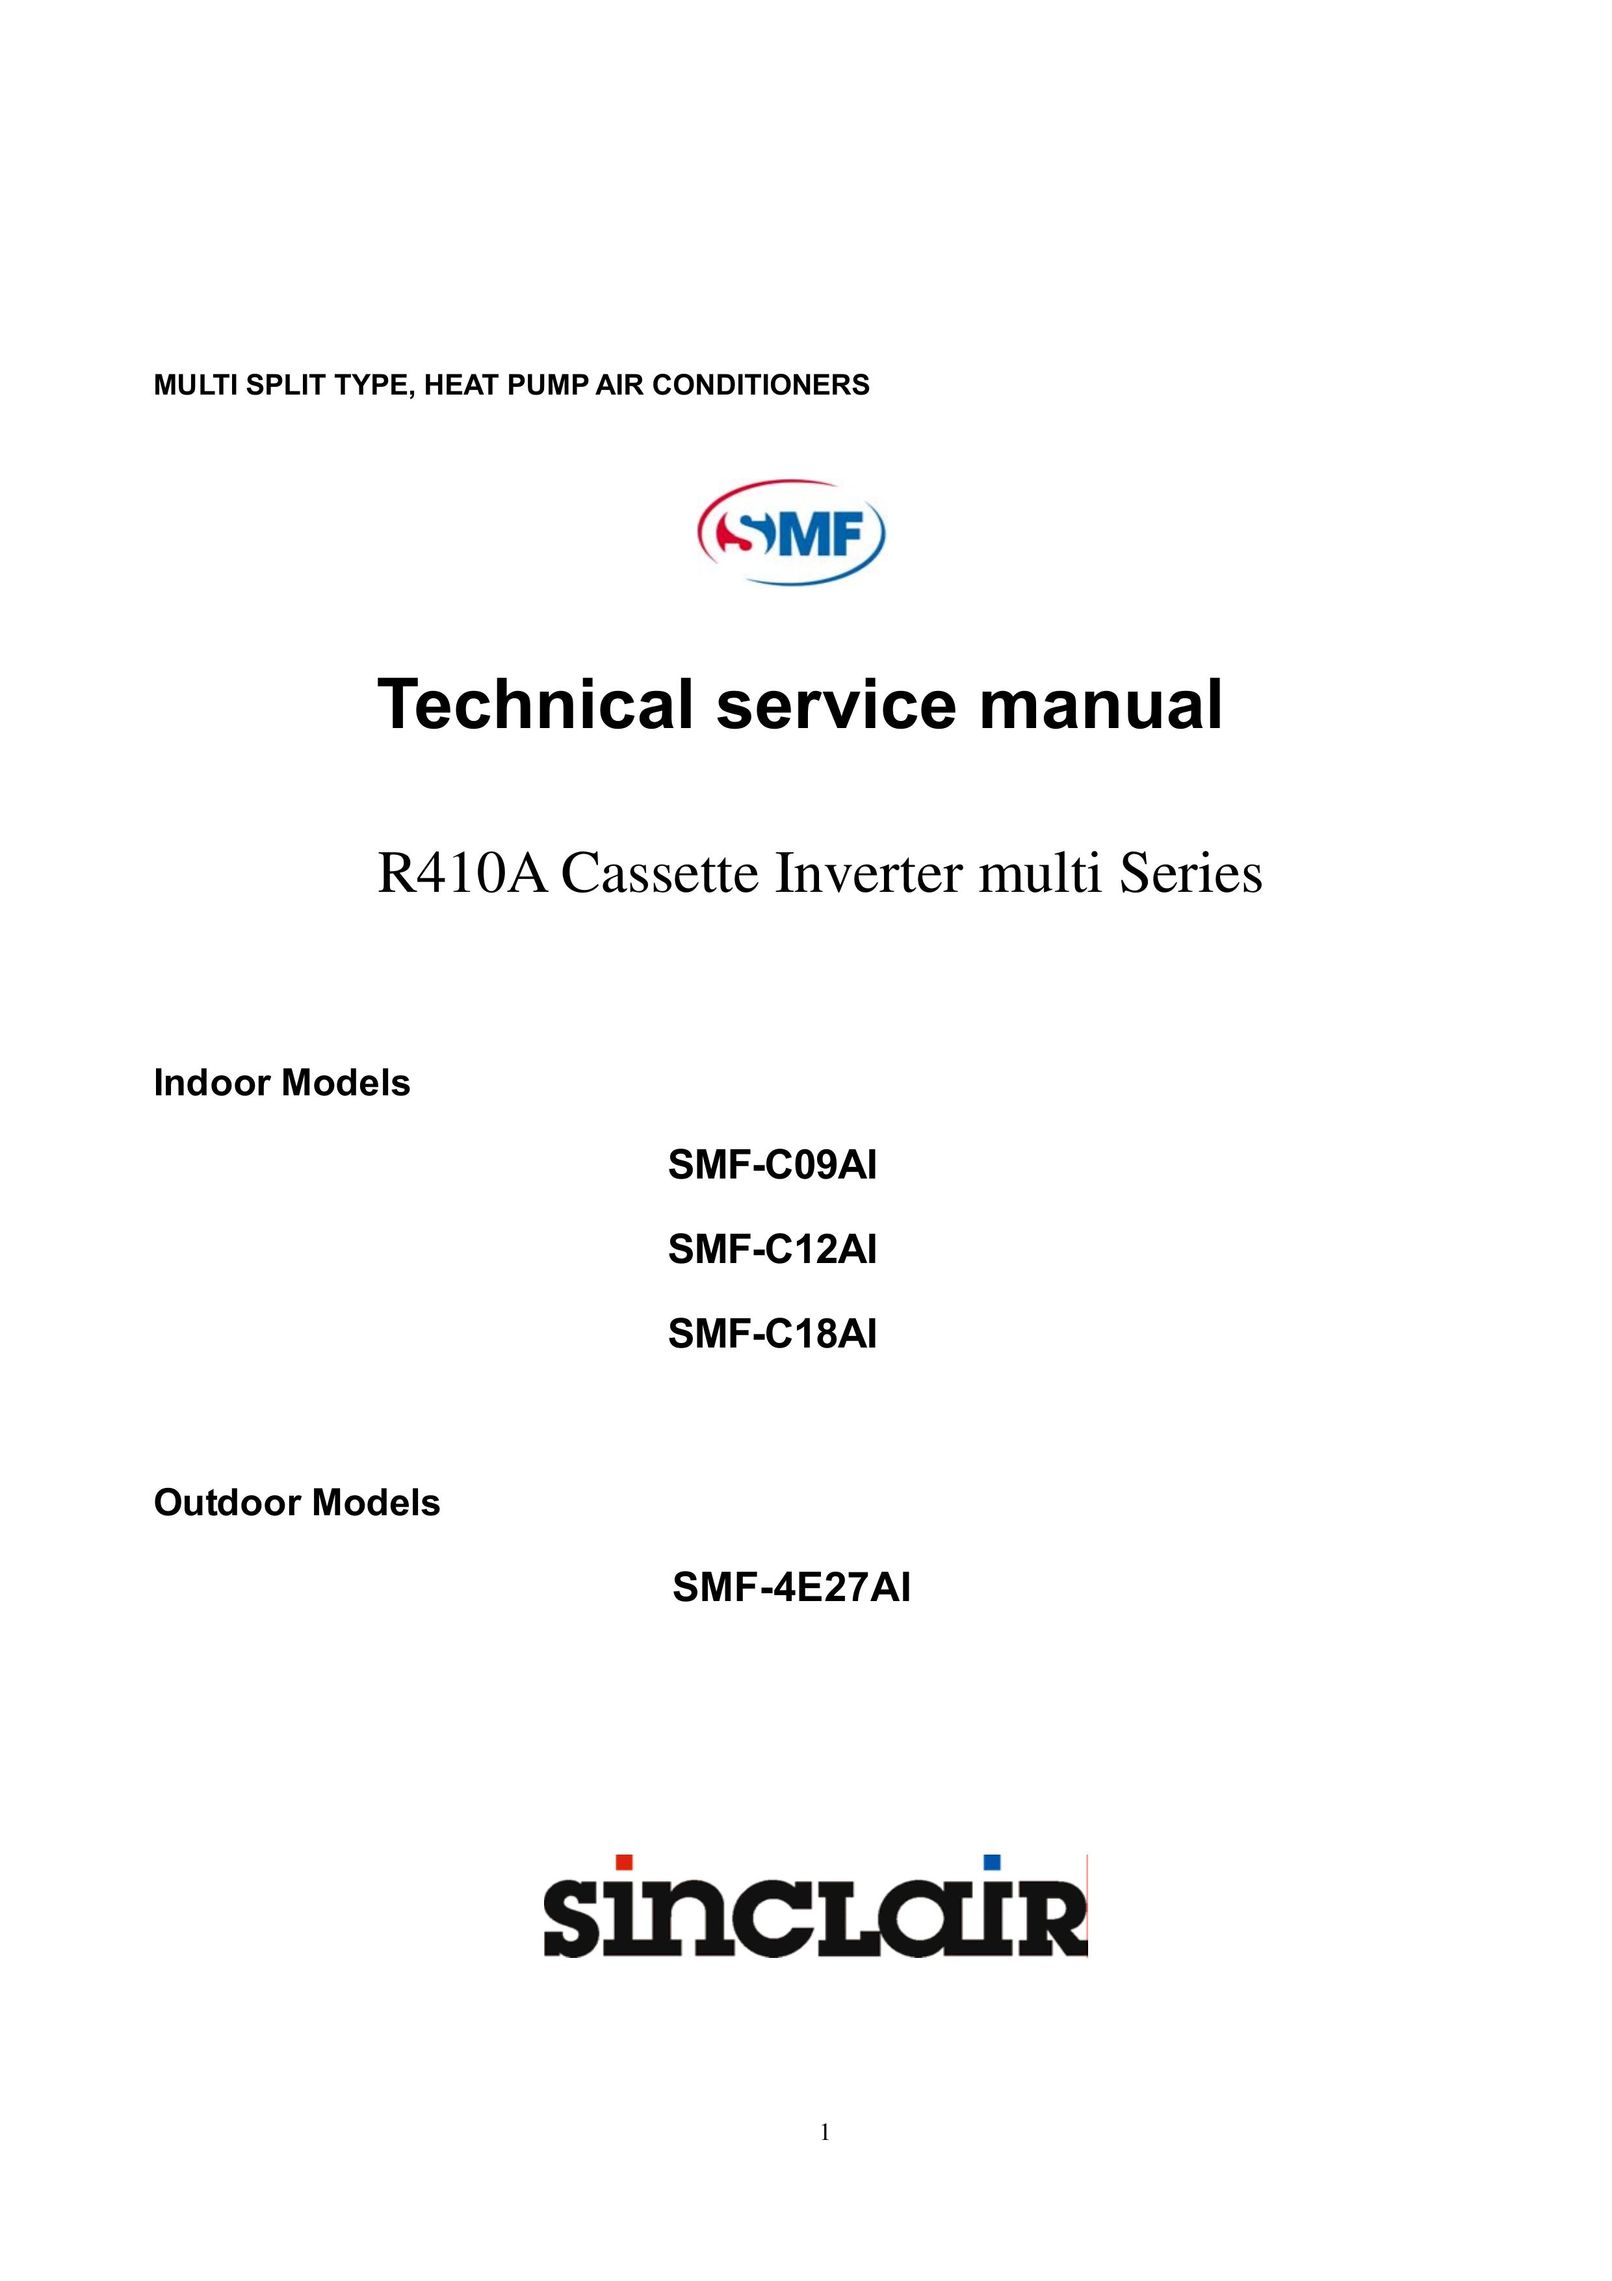 Sinclair SMF-4E27AI Air Conditioner User Manual